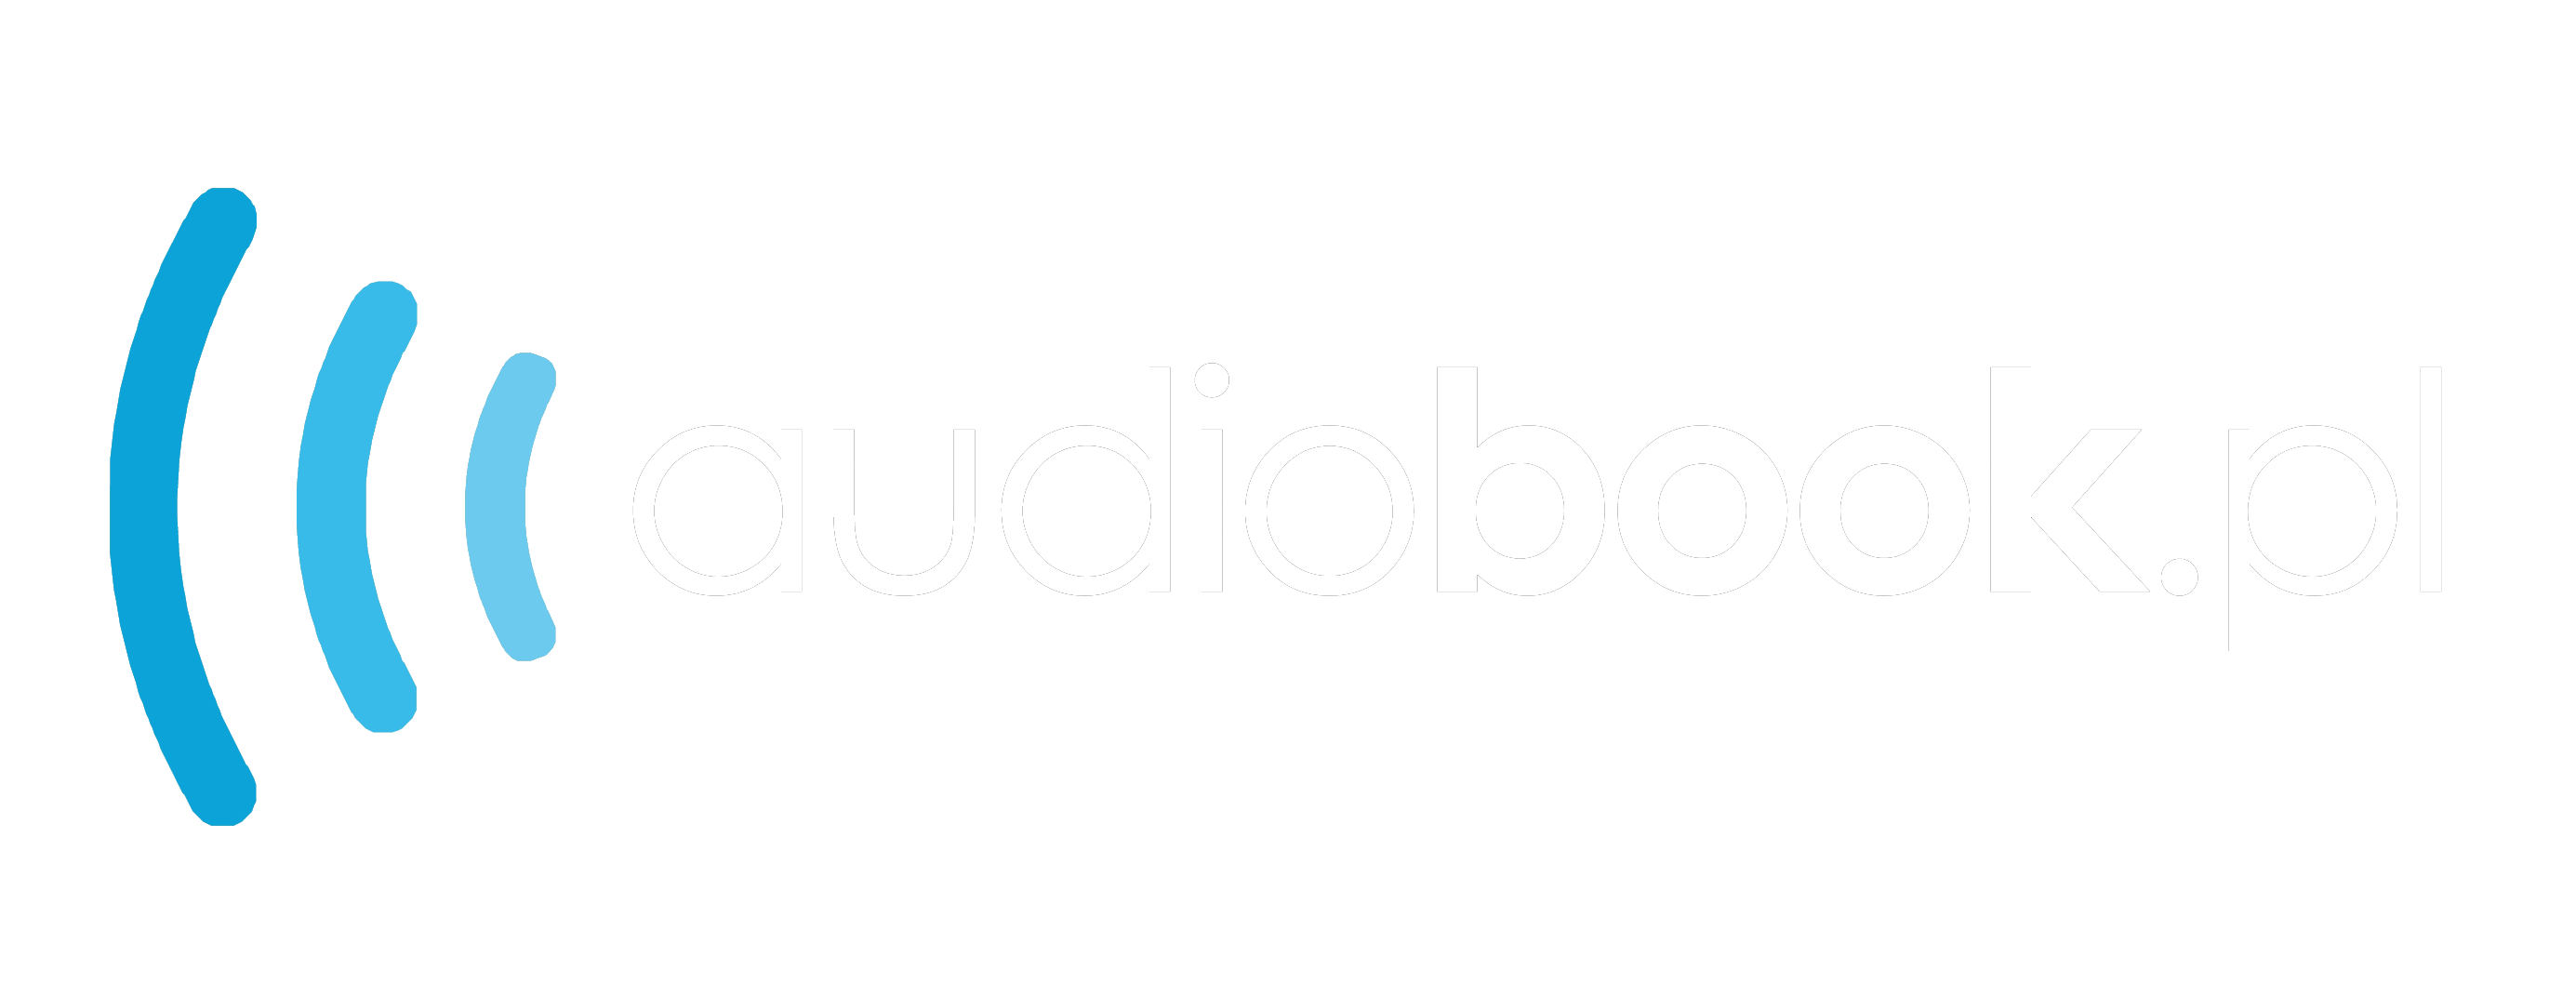 Audiobook.pl